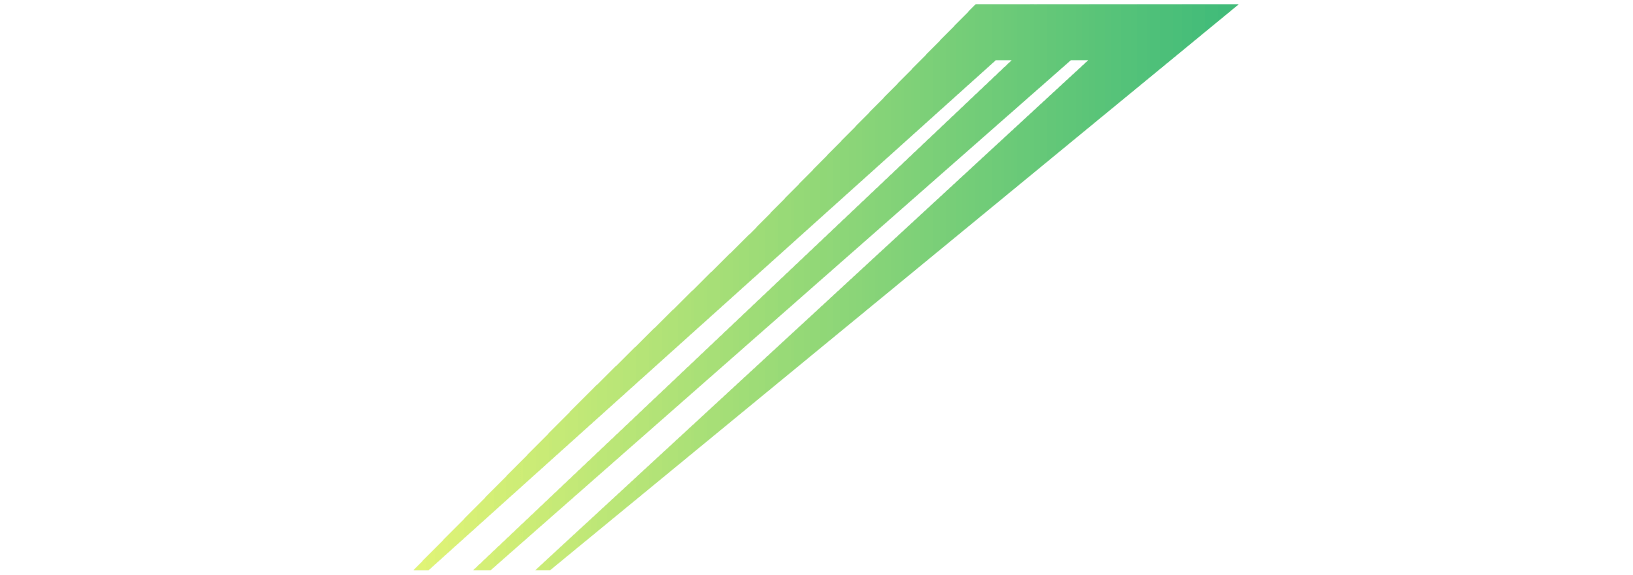 OKO logo